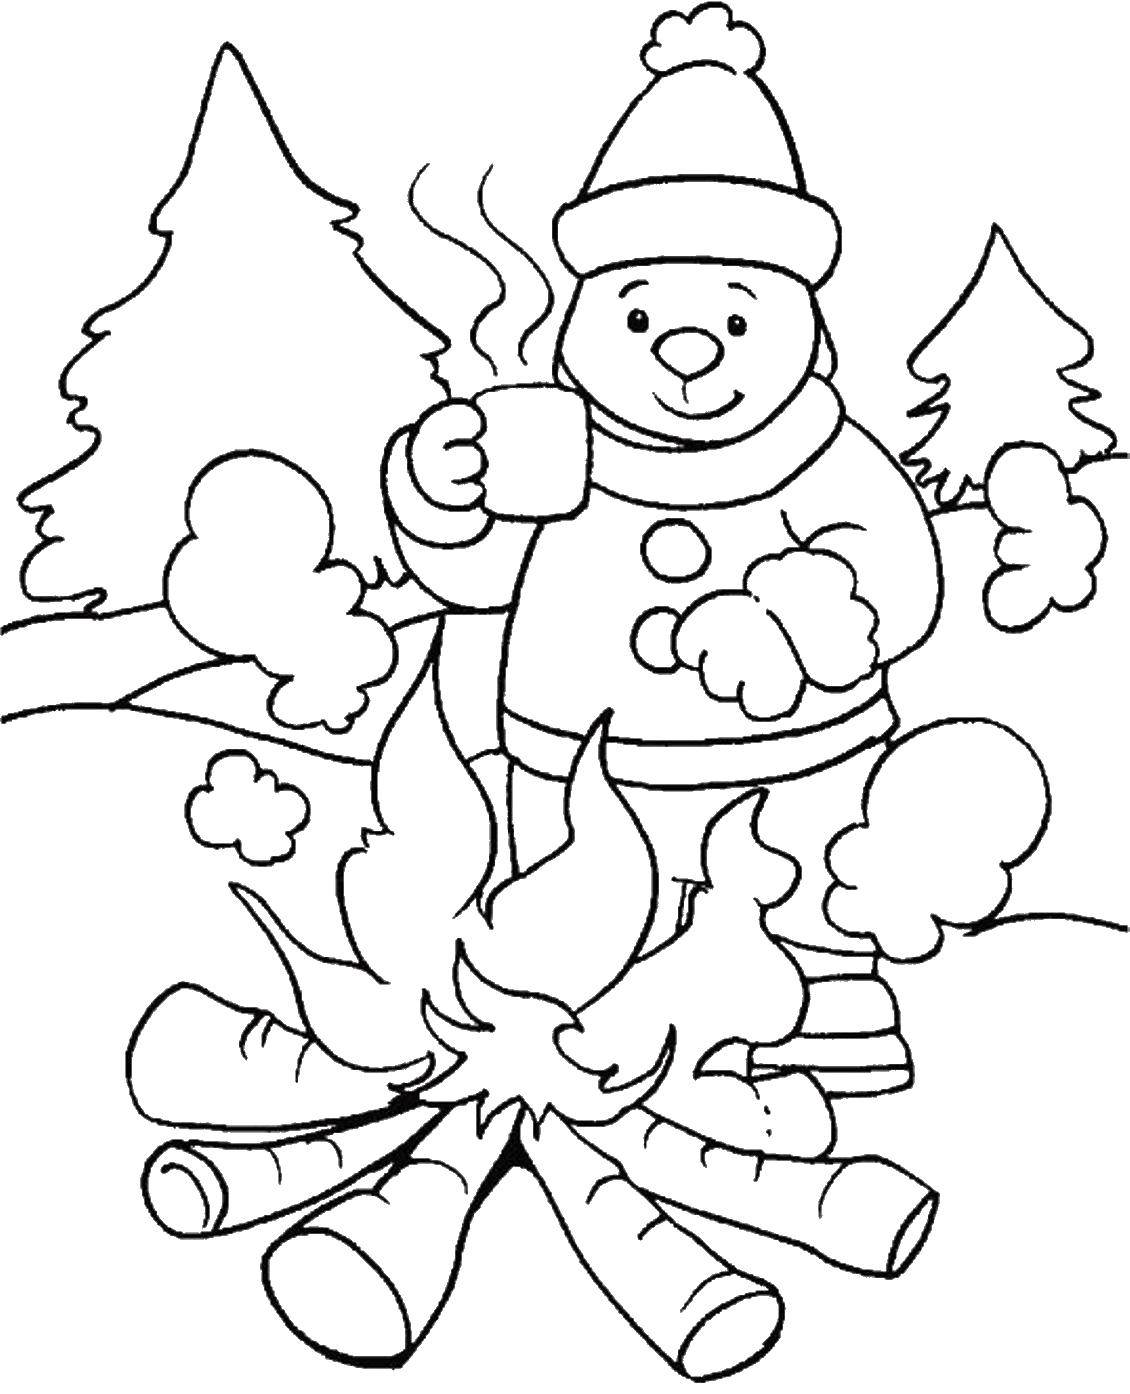 Название: Раскраска Медведь и костер. Категория: раскраски зима. Теги: медведь, зима, костер, кружка.